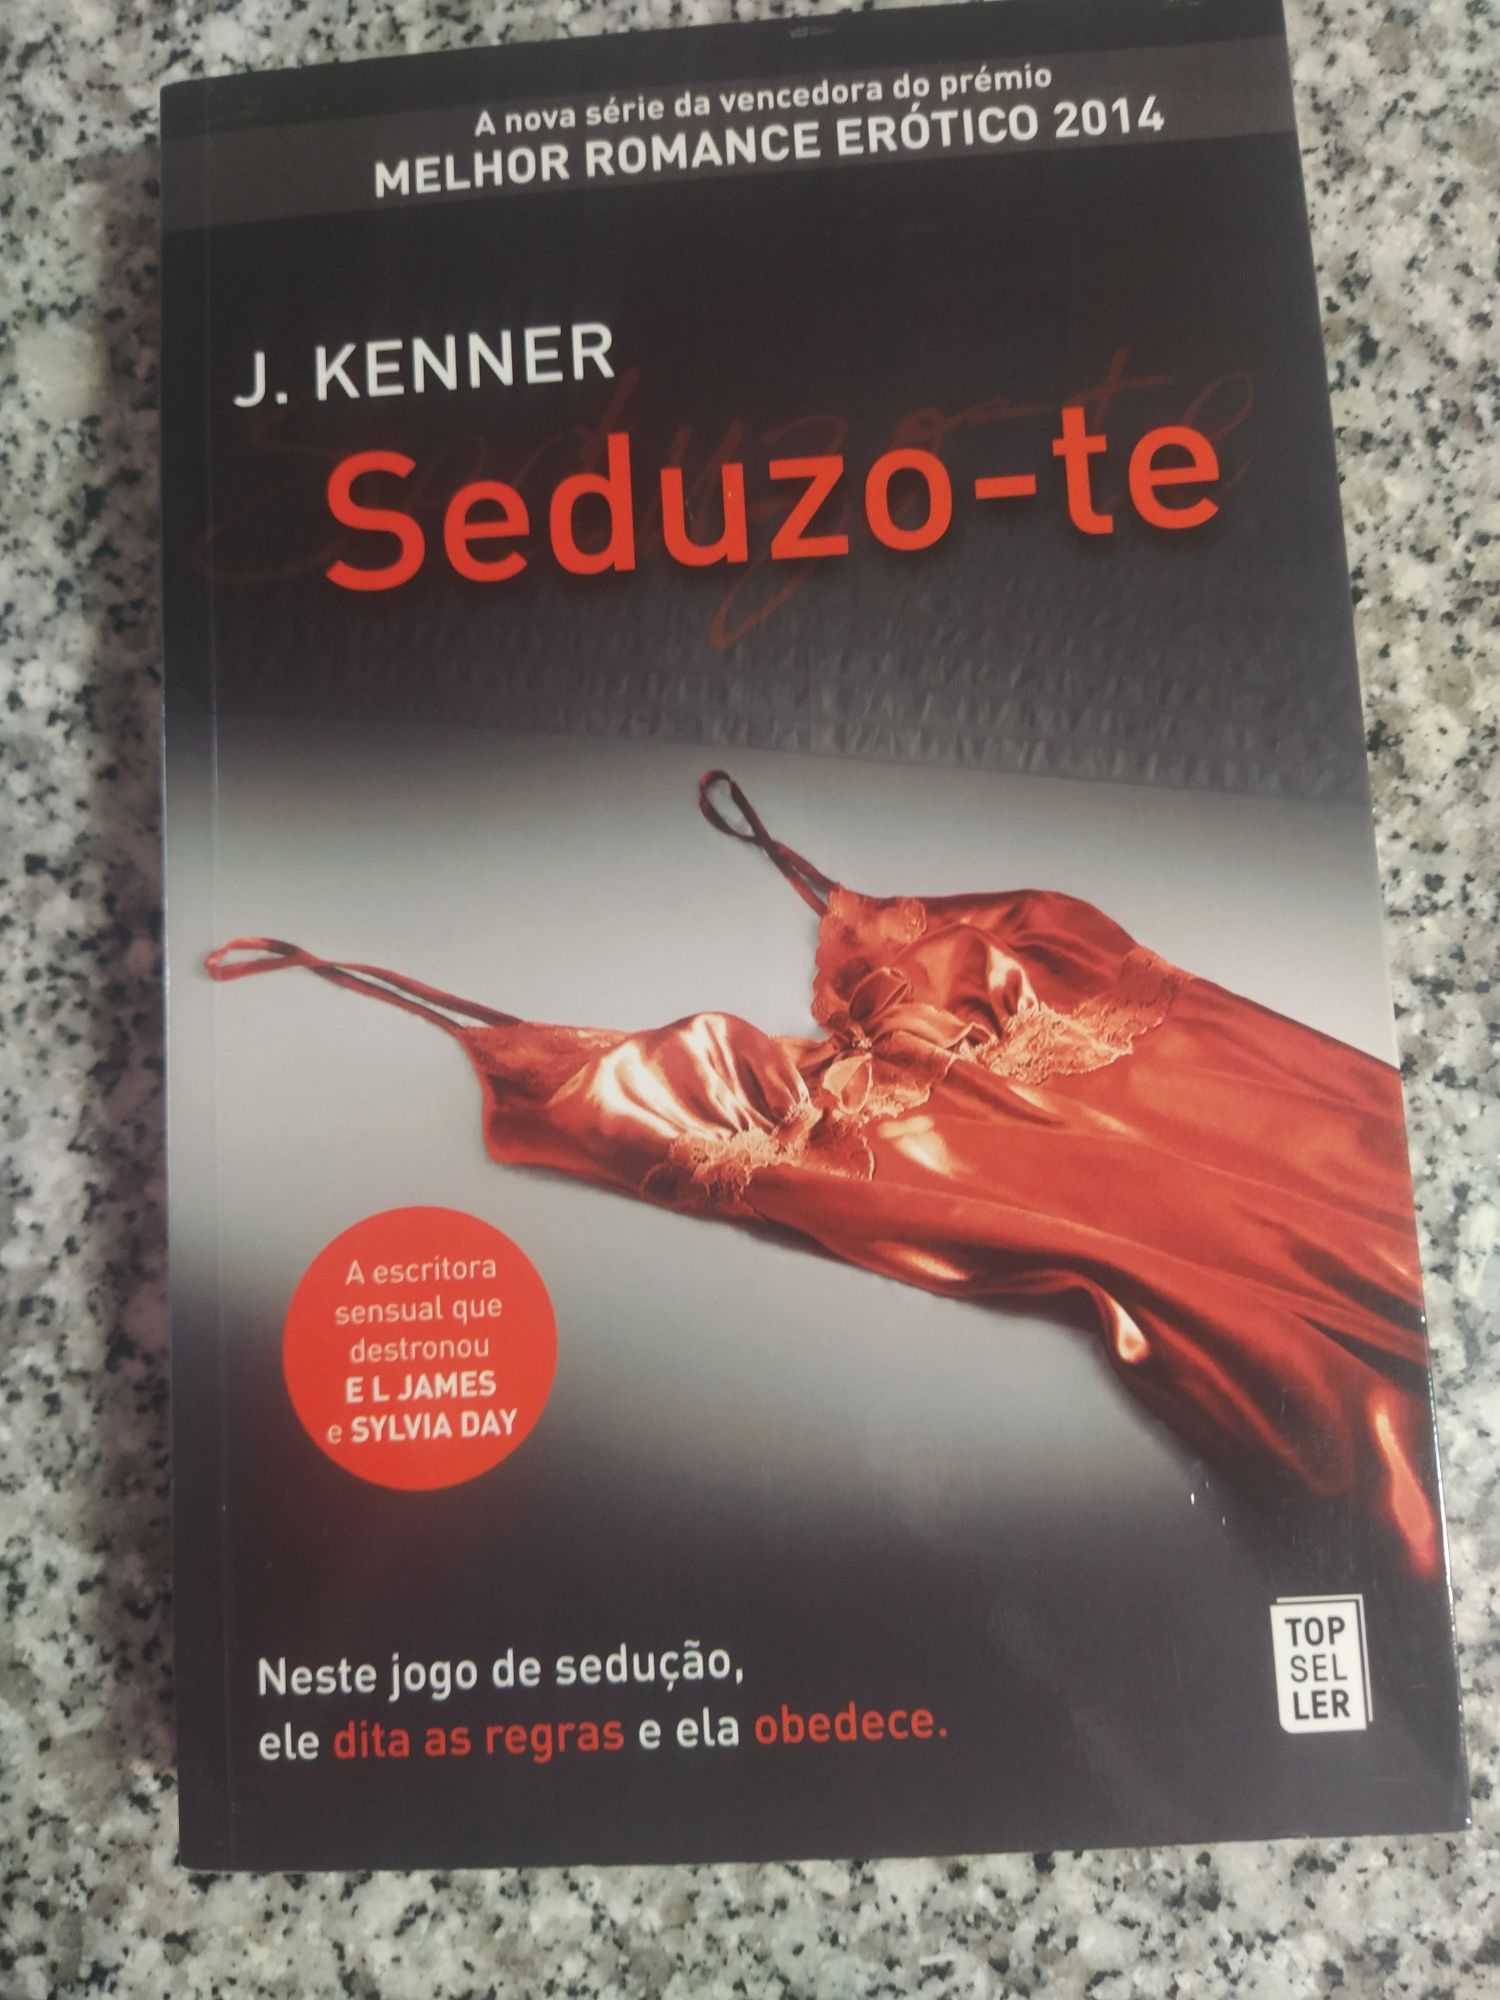 Livro de J. Kenner Seduzo-te